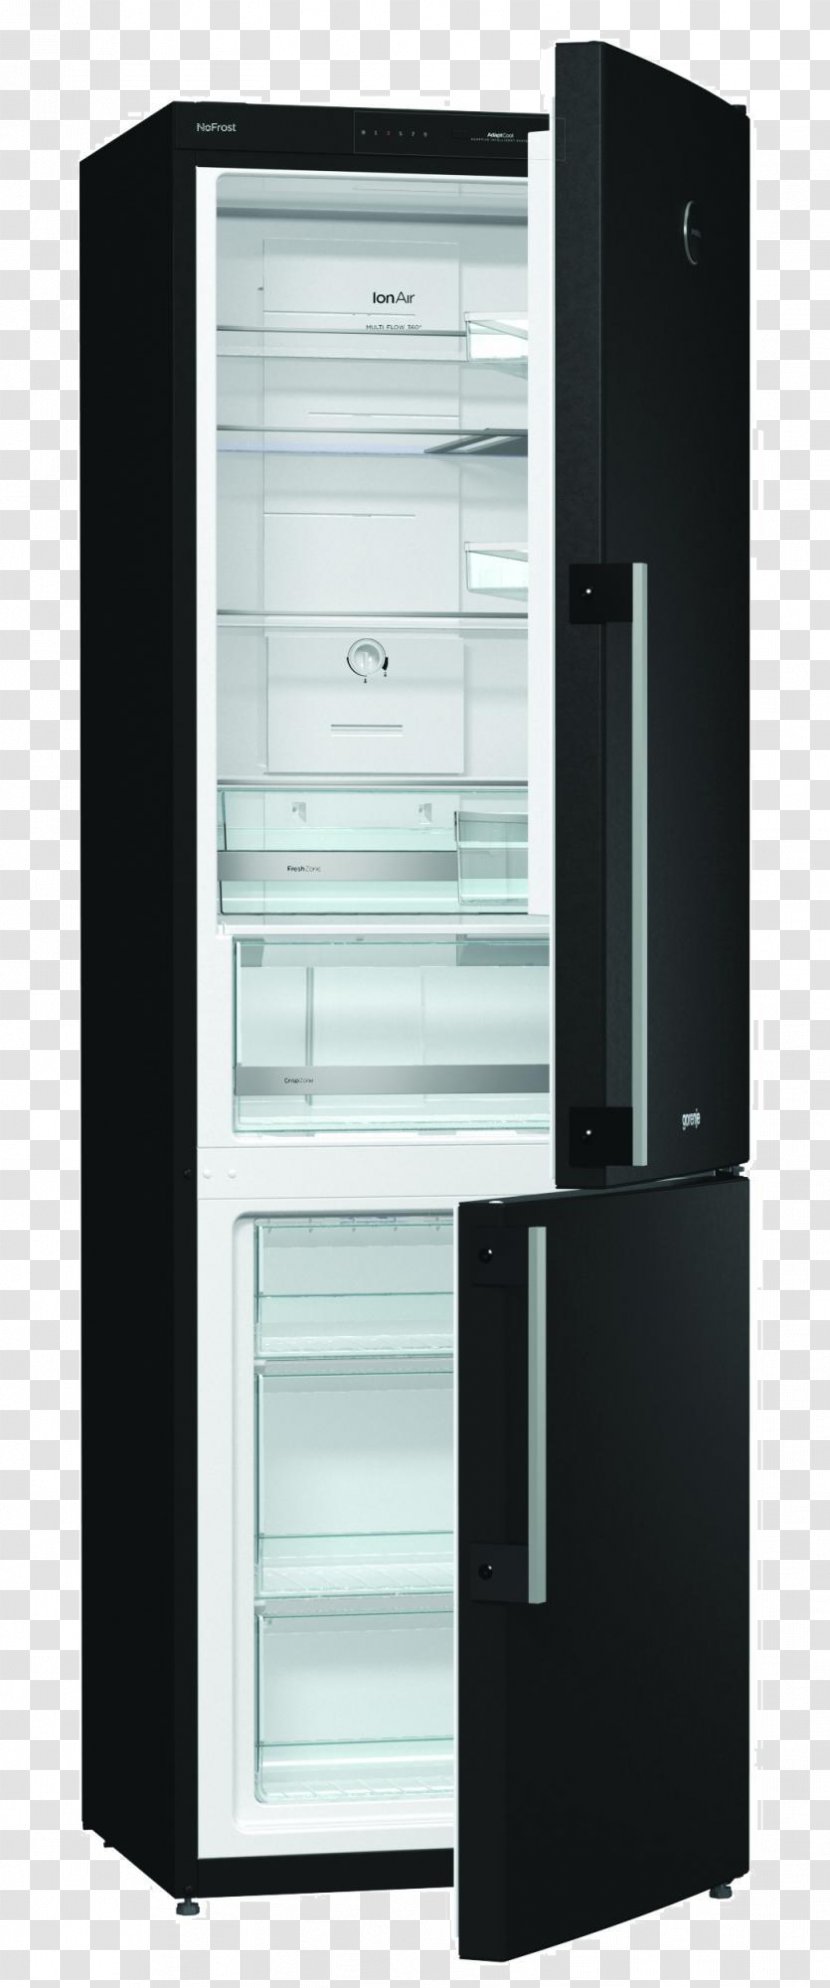 Refrigerator Freezers Gorenje Home Appliance European Union Energy Label Transparent PNG